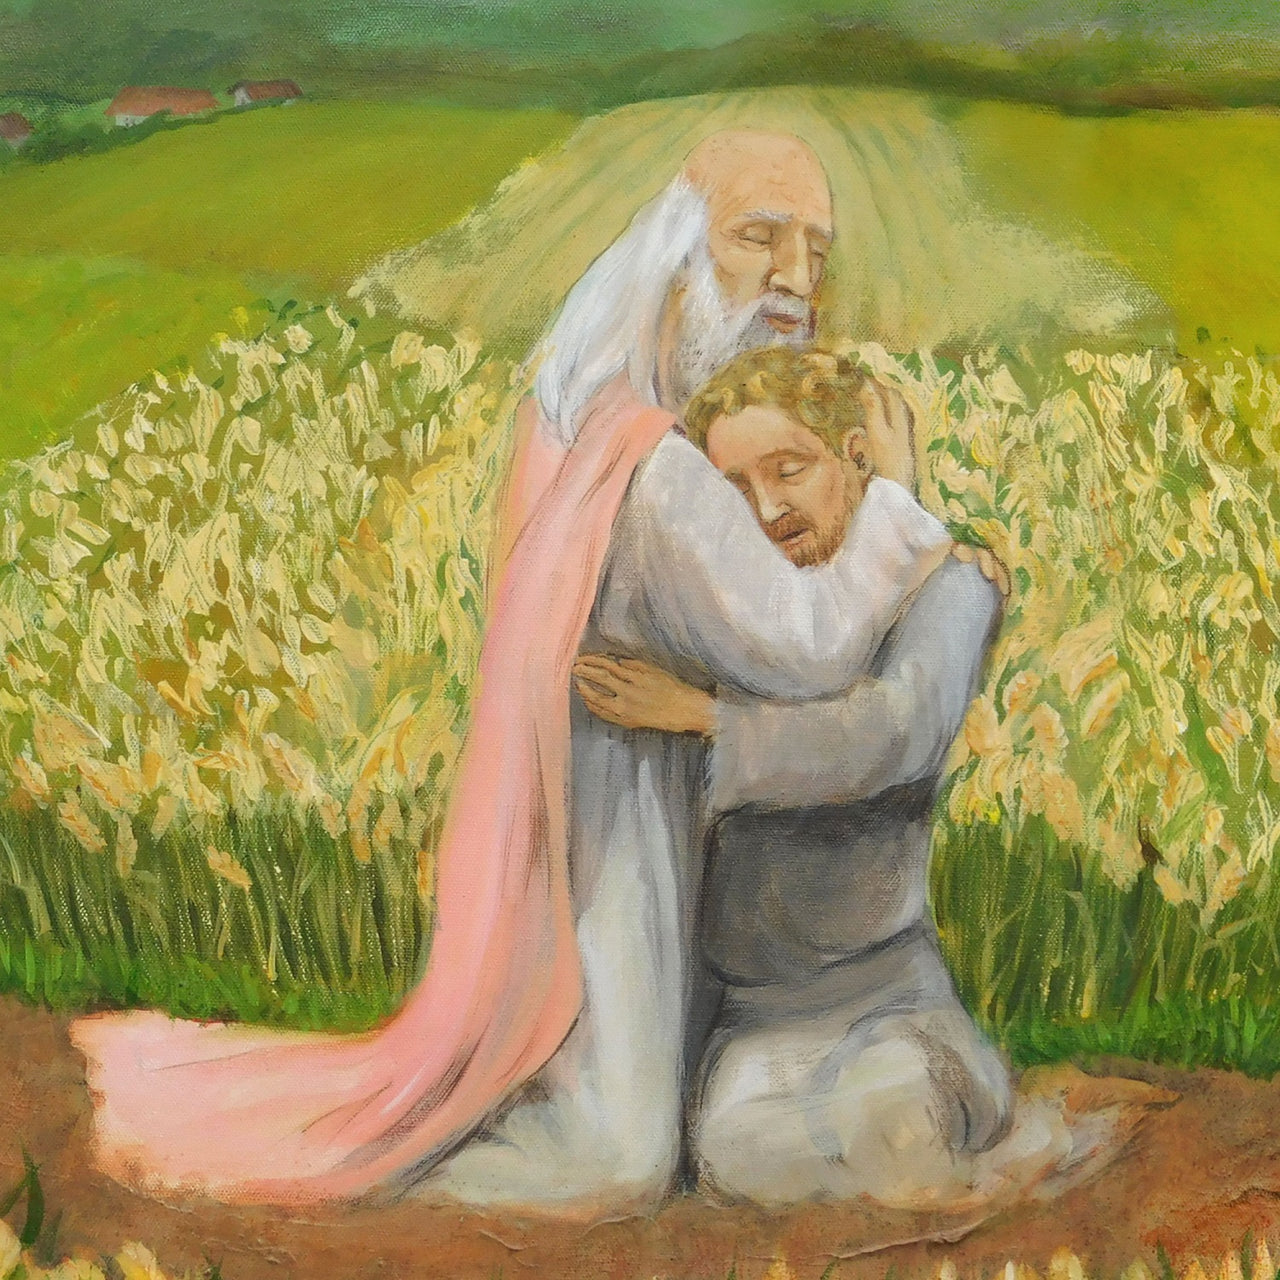 The Prodigal Son Returns - Canvas Print